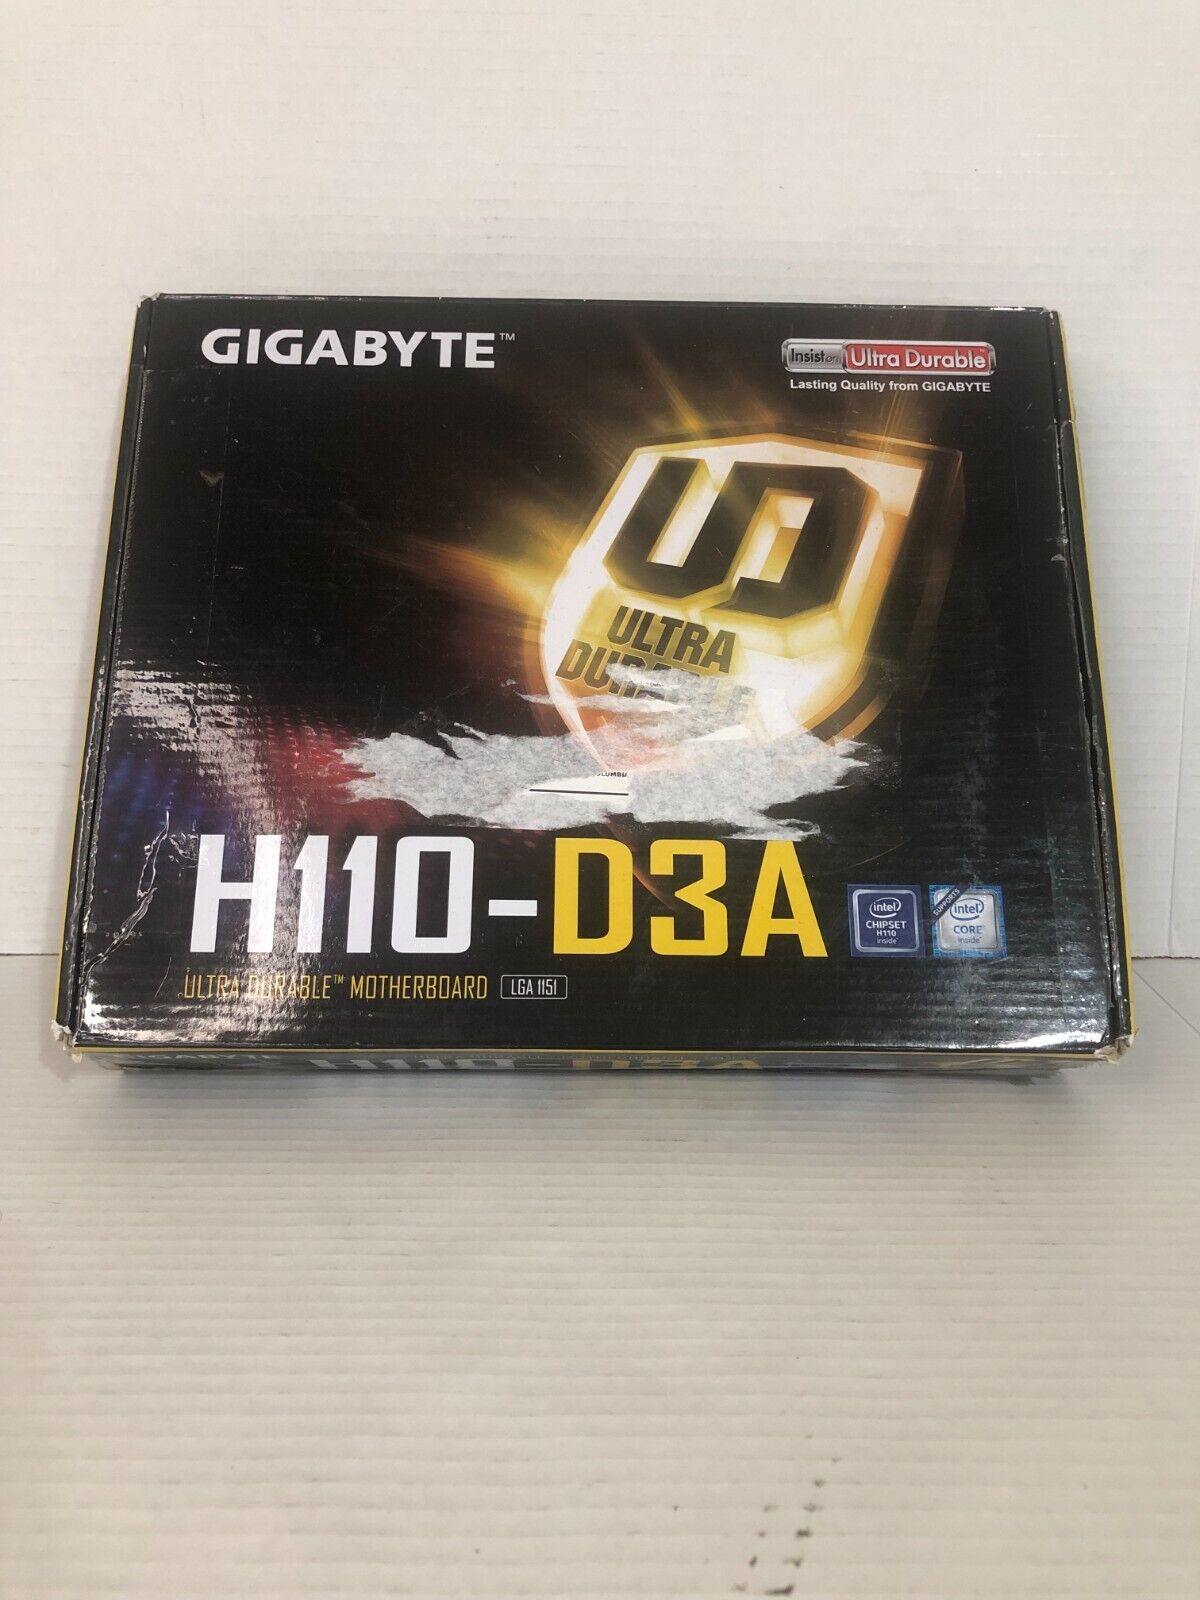 GIGABYTE GA-H110-D3A LGA 1151 Intel Motherboard & CPU Chip Combo Mining 6x PCIE